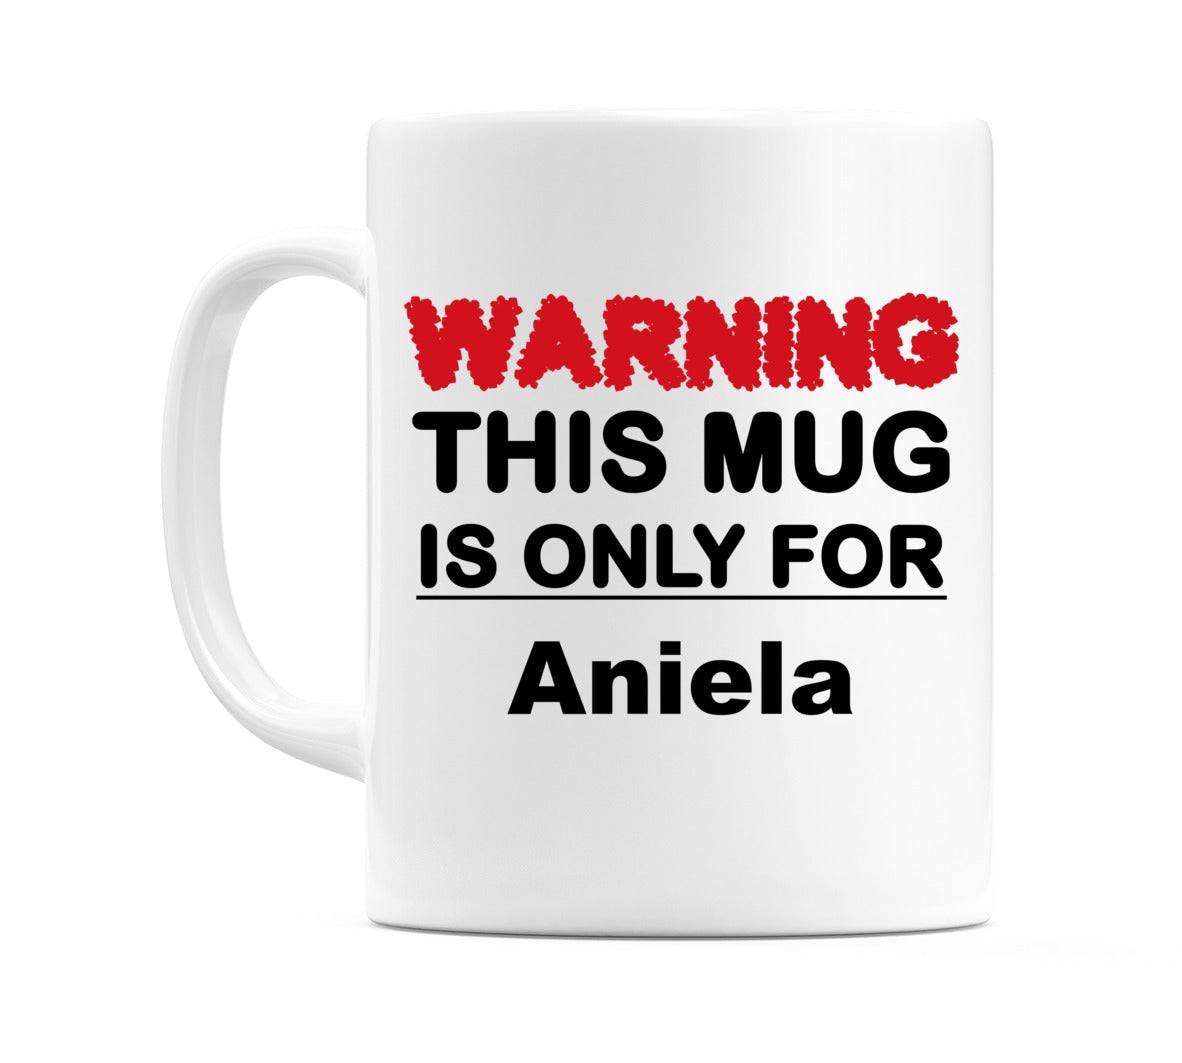 Warning This Mug is ONLY for Aniela Mug